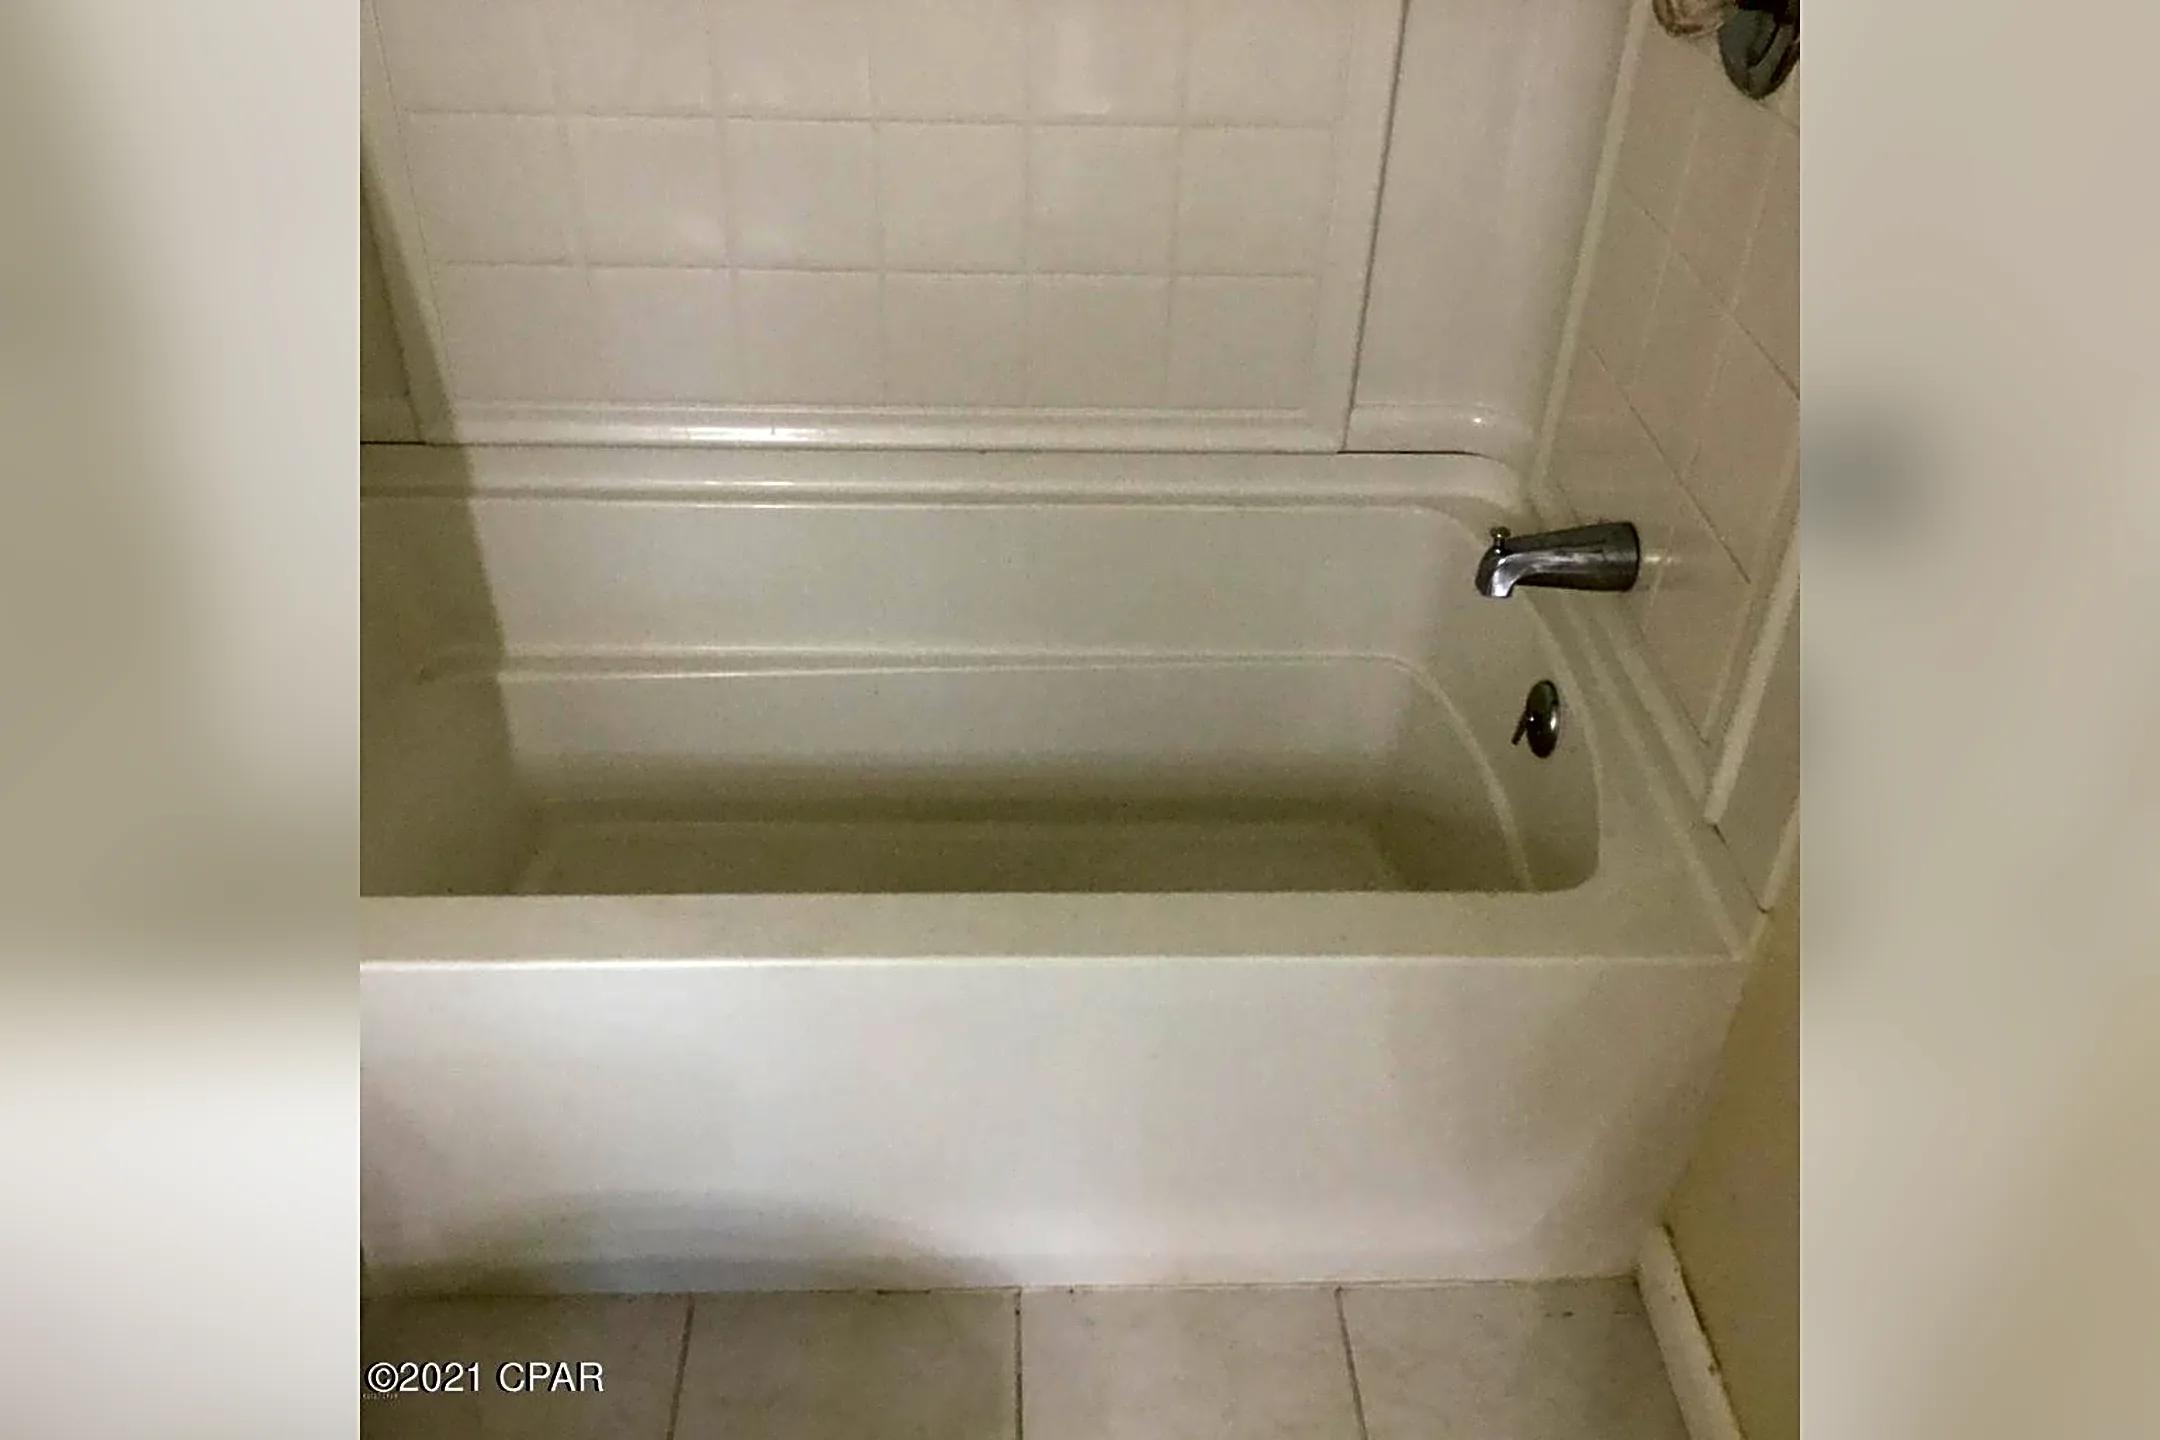 Bathroom - 1025 W 19th St #16C - Panama City, FL